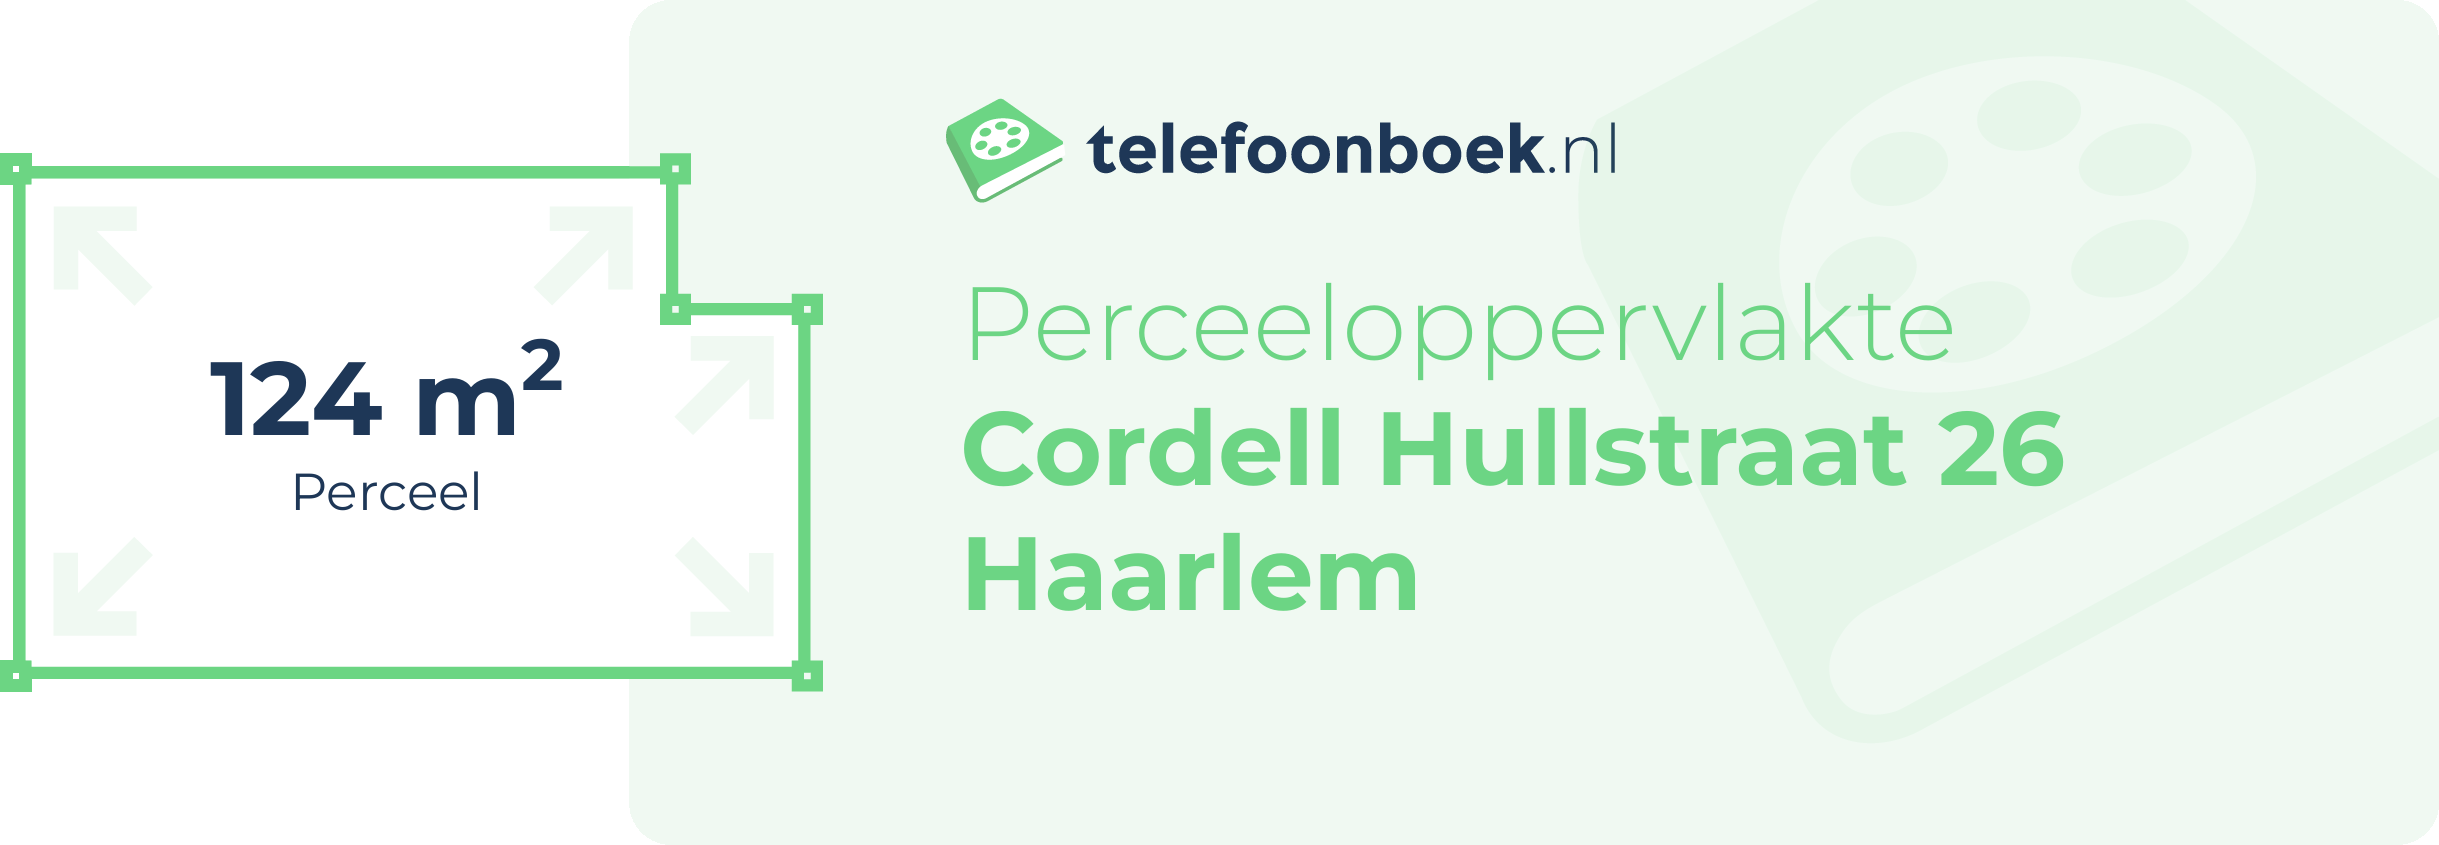 Perceeloppervlakte Cordell Hullstraat 26 Haarlem